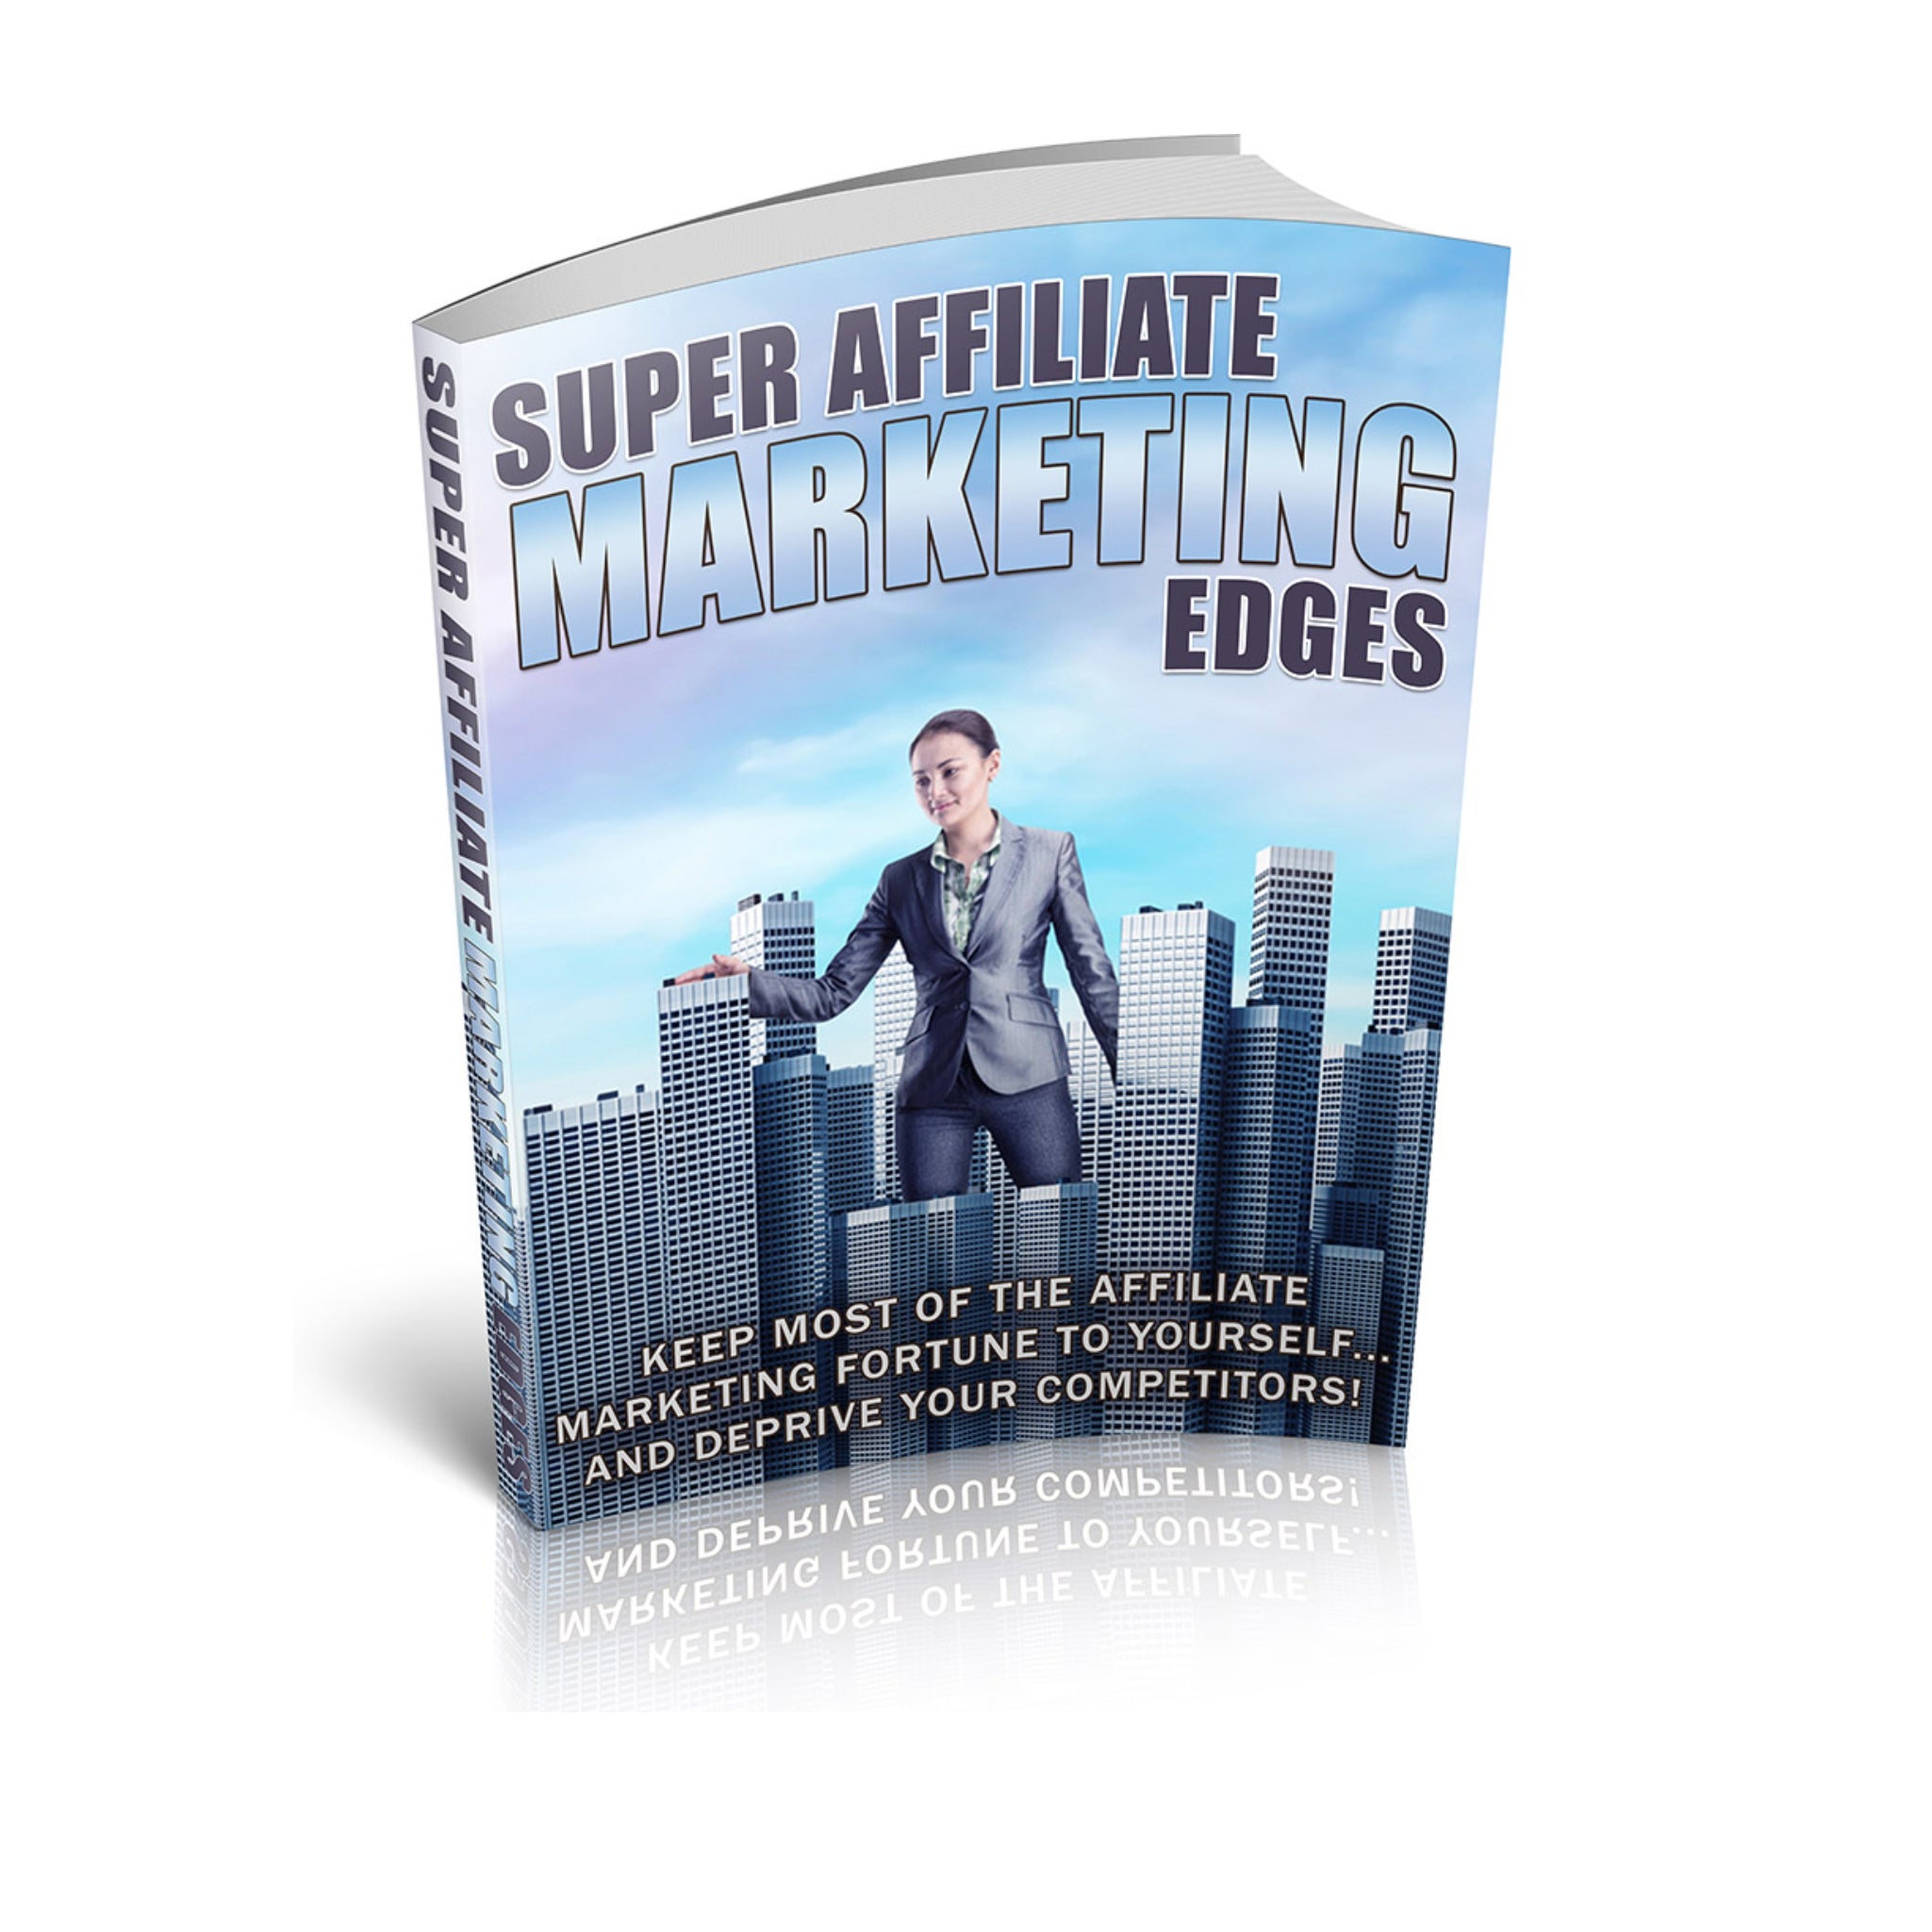 Super Affiliate Marketing Edges Ebook